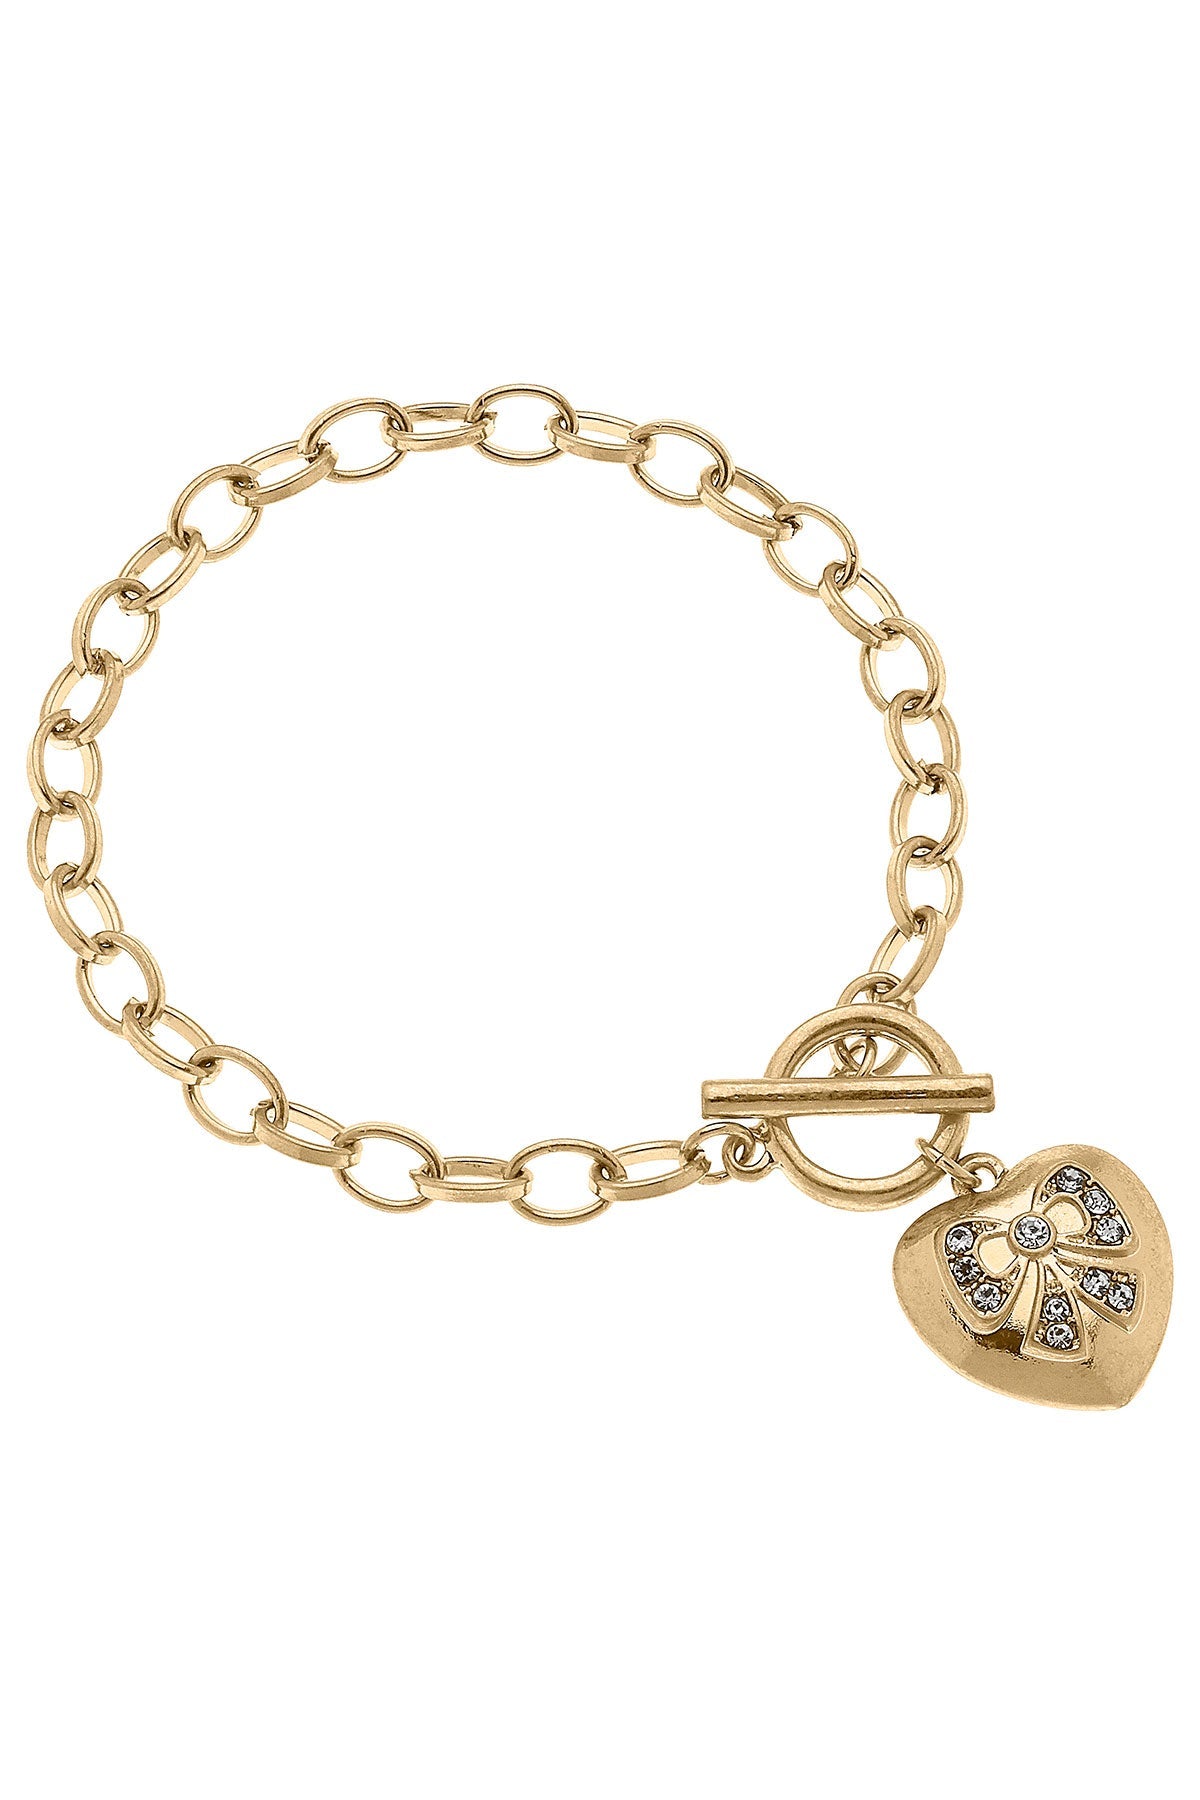 Rylan Pavé Bow Heart Charm T-Bar Bracelet in Worn Gold by CANVAS